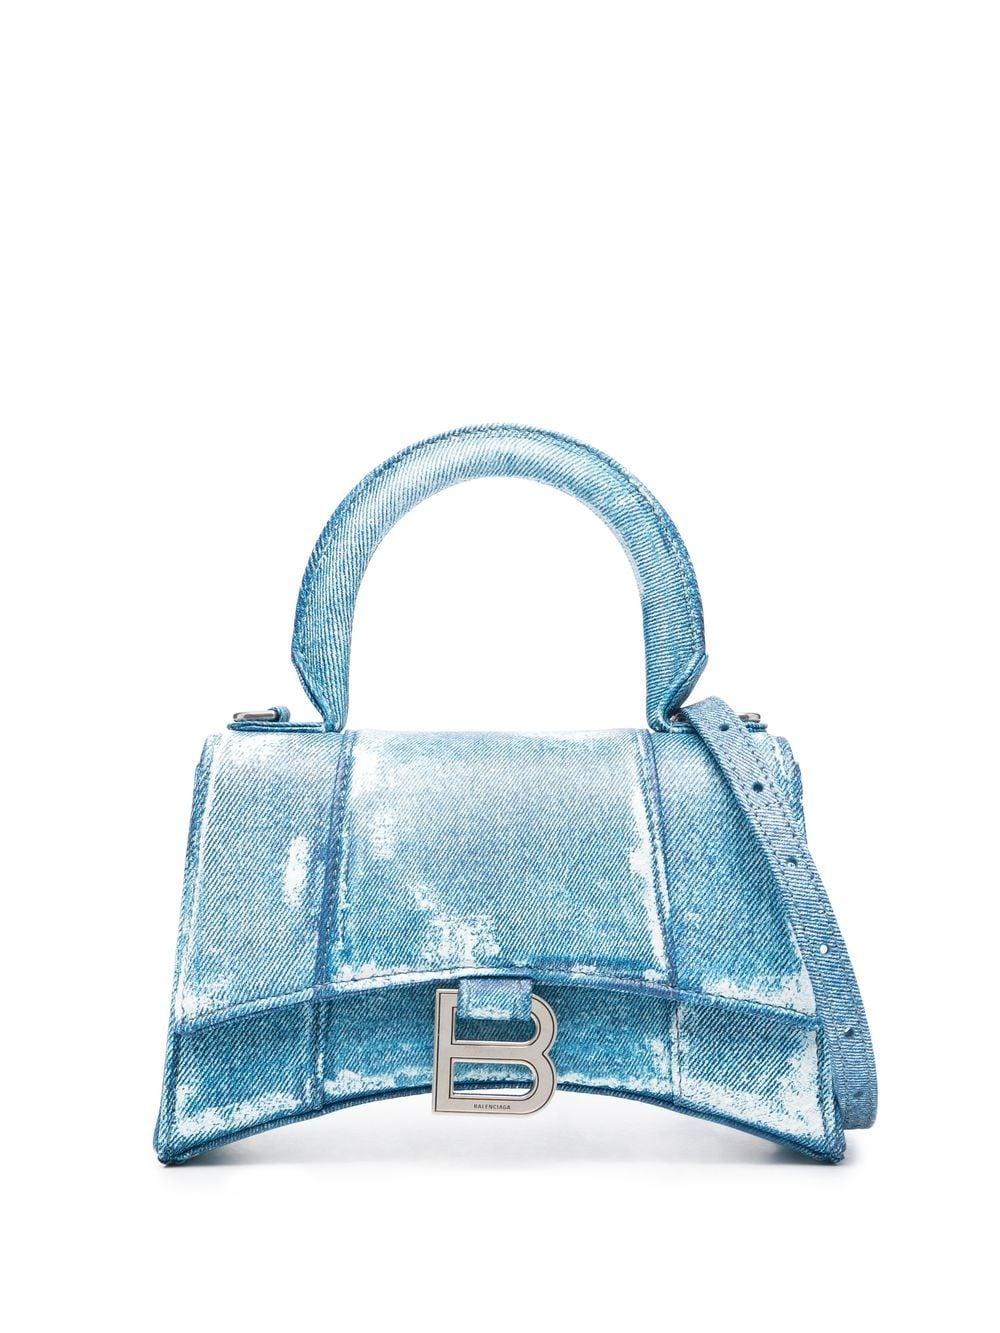 Balenciaga Xs Hourglass Top Handle Bag in Metallic Silver